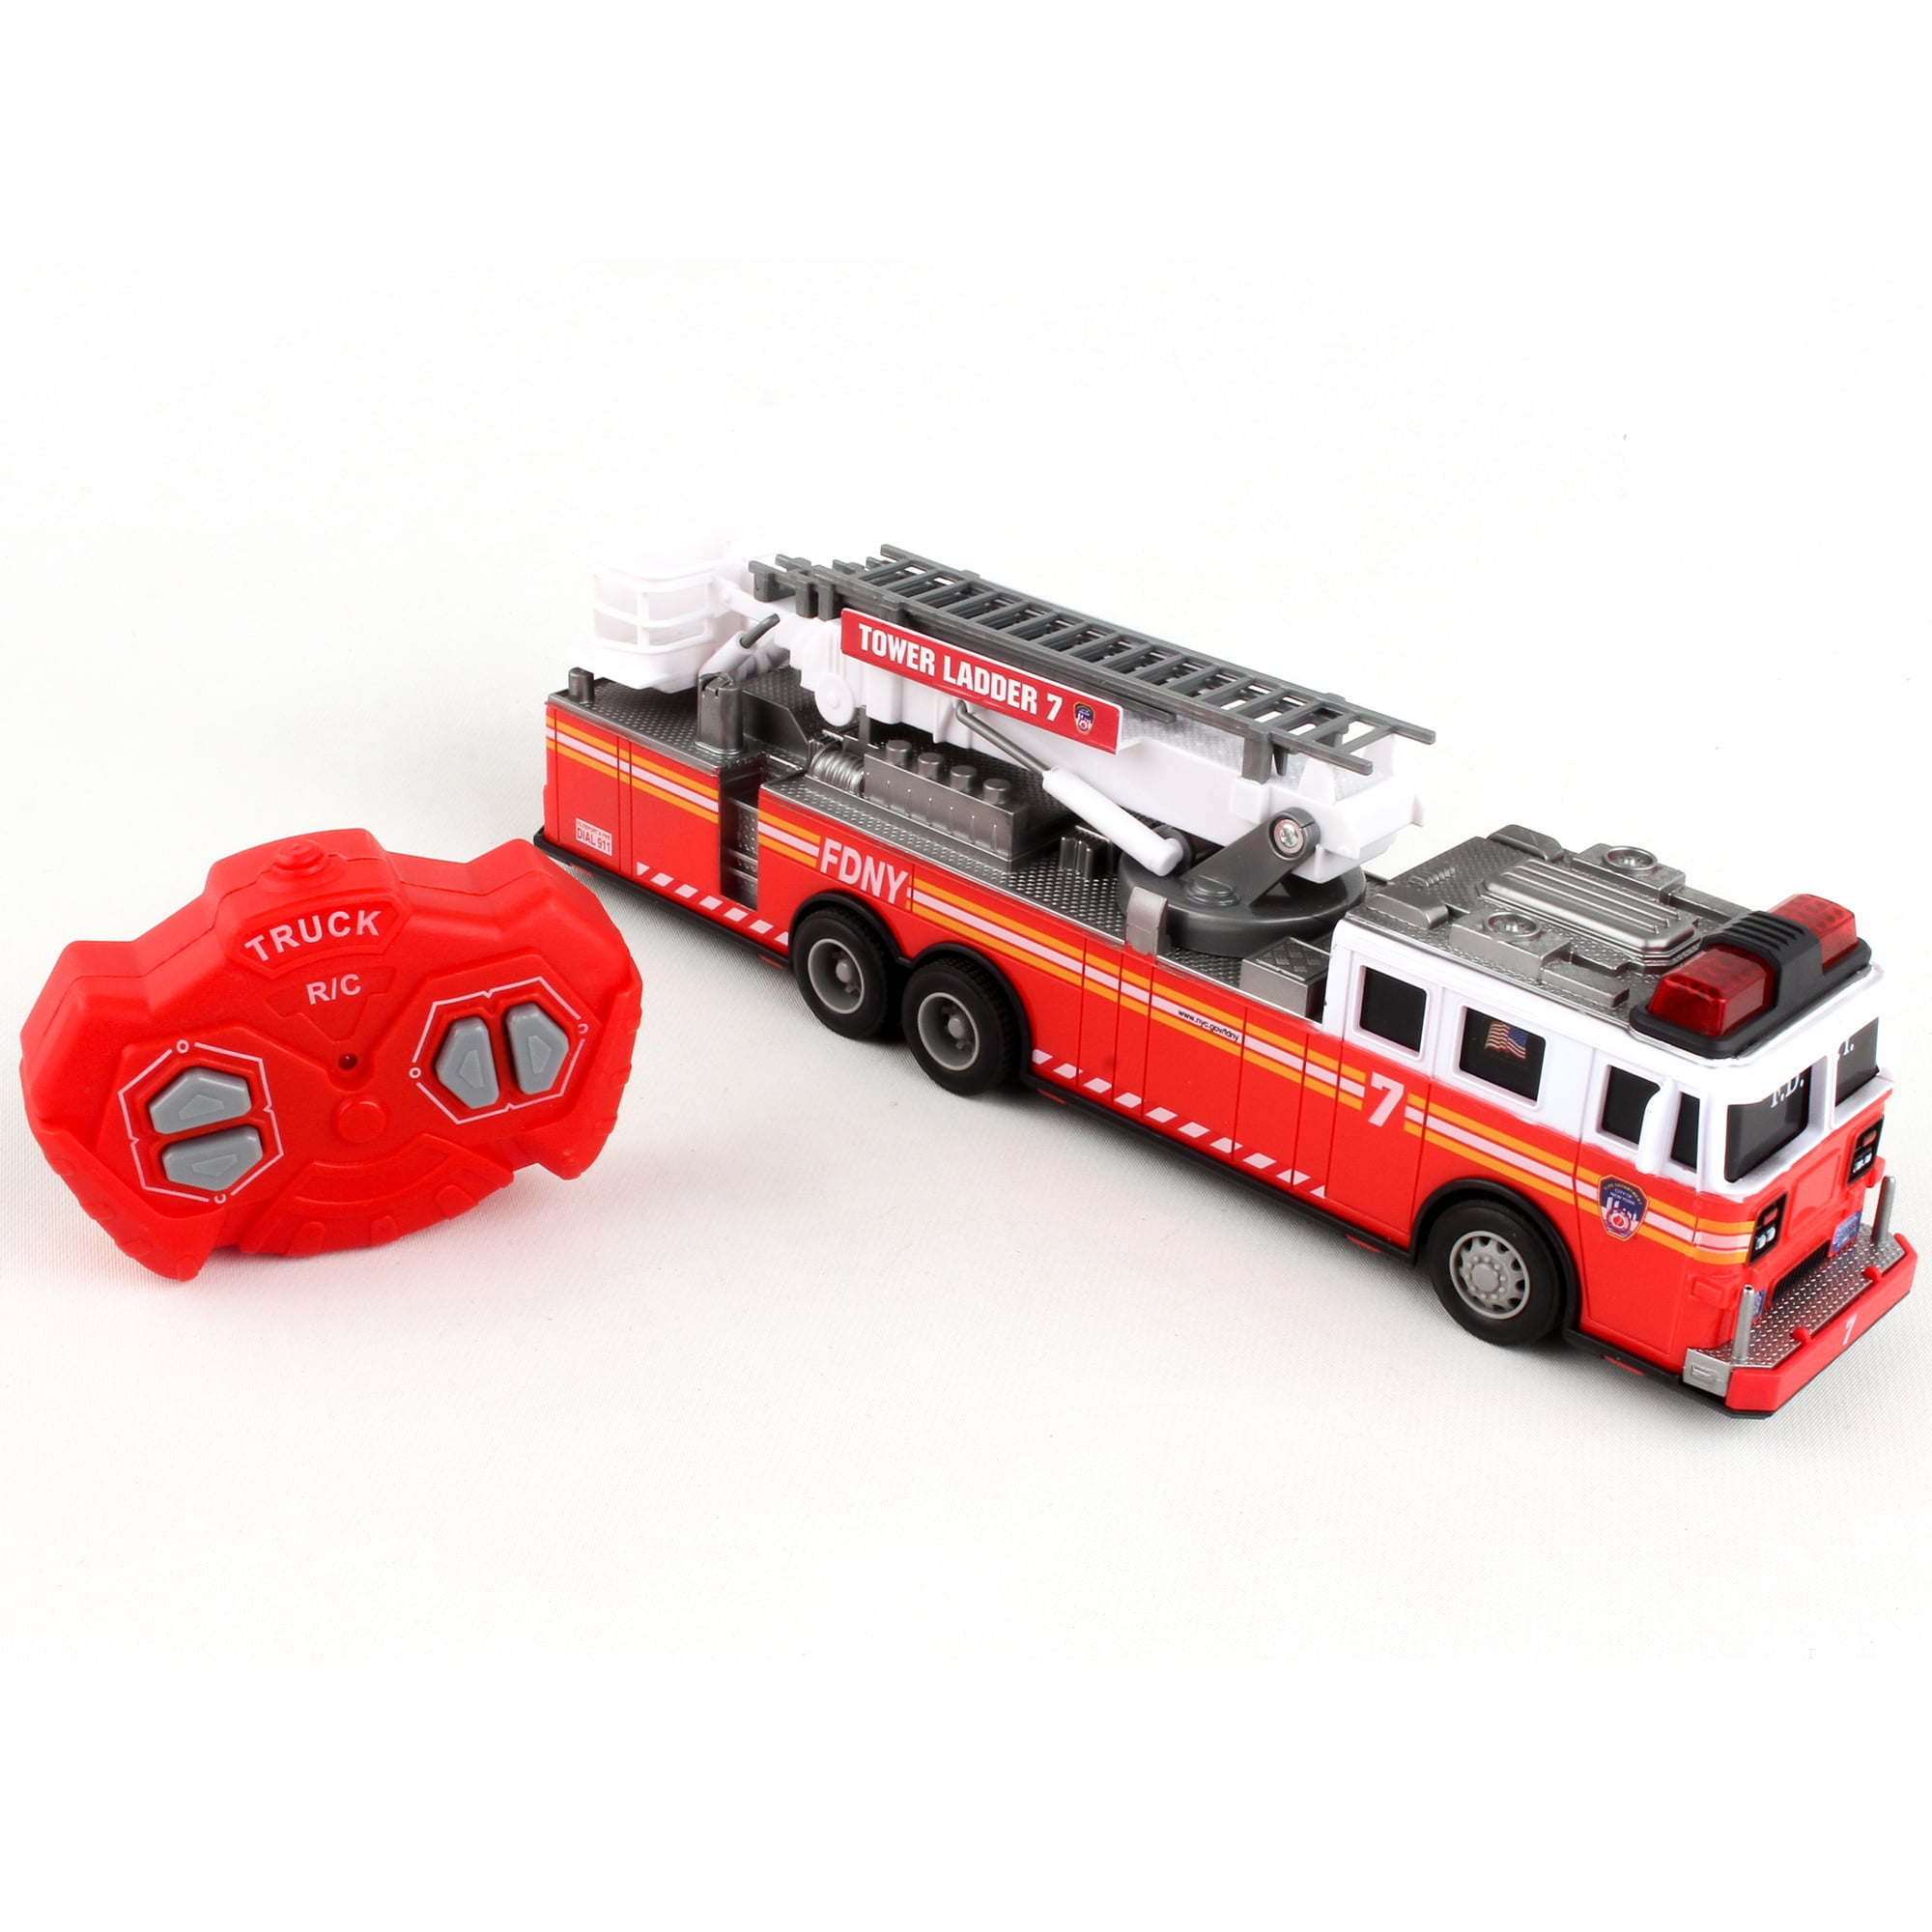 FDNY: Radio Control Ladder Fire Truck 11